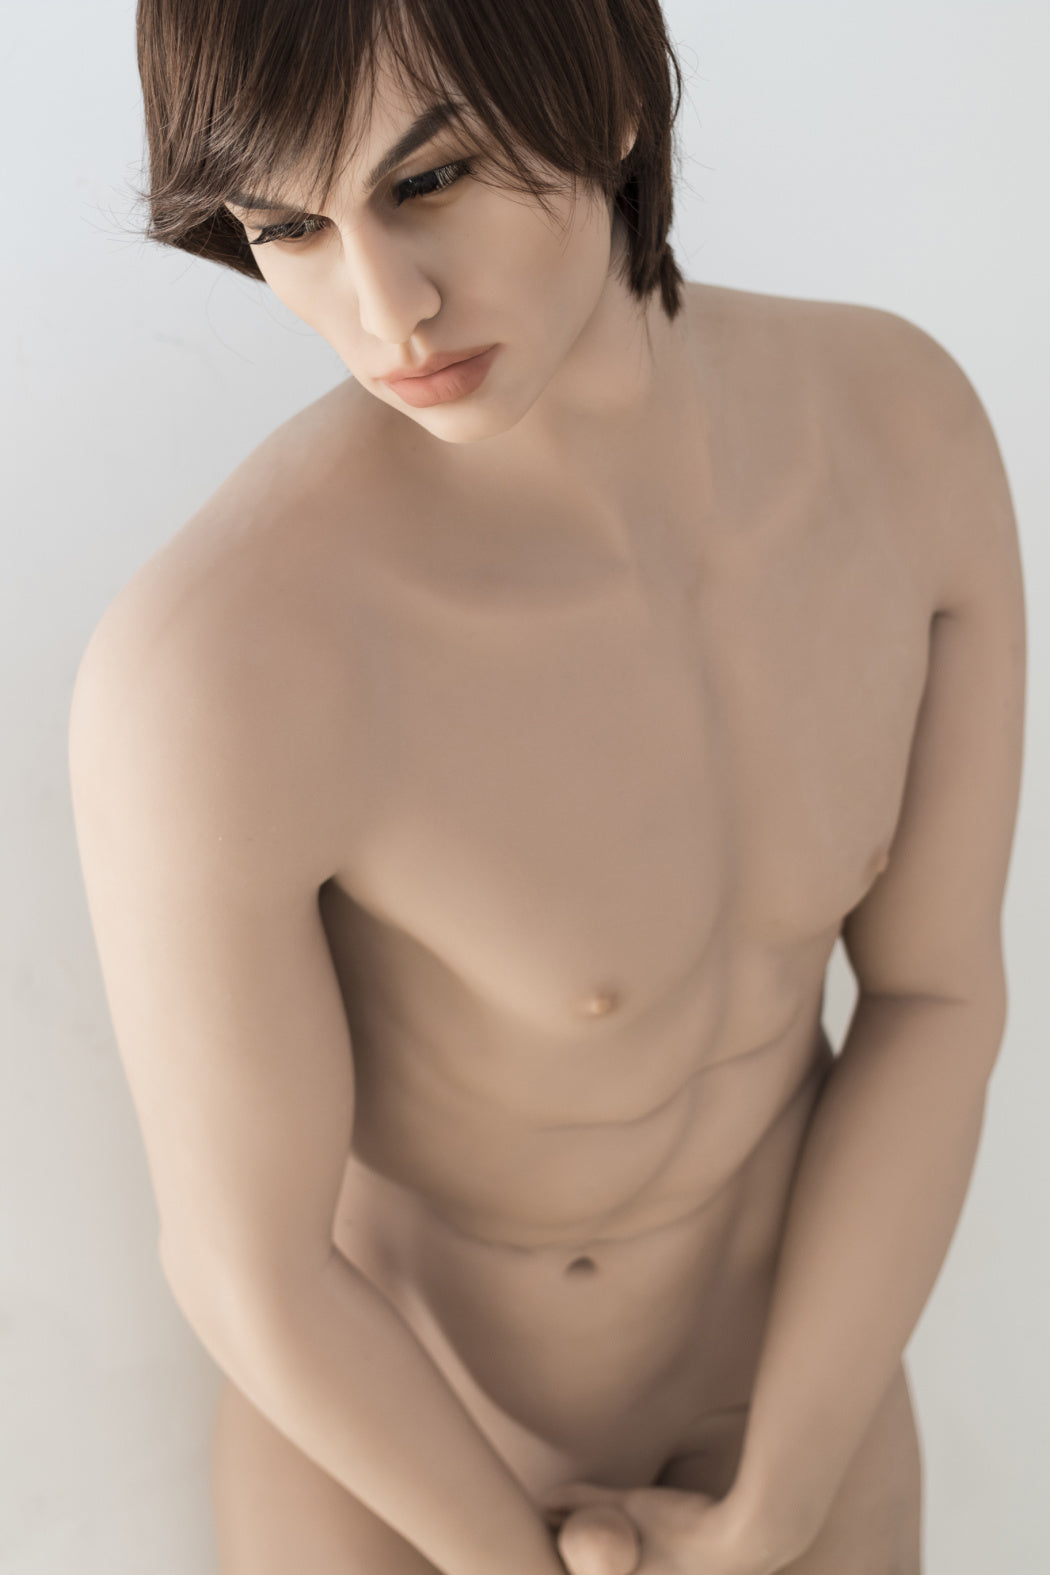 John (6-Inch) (175cm) | Sex Doll